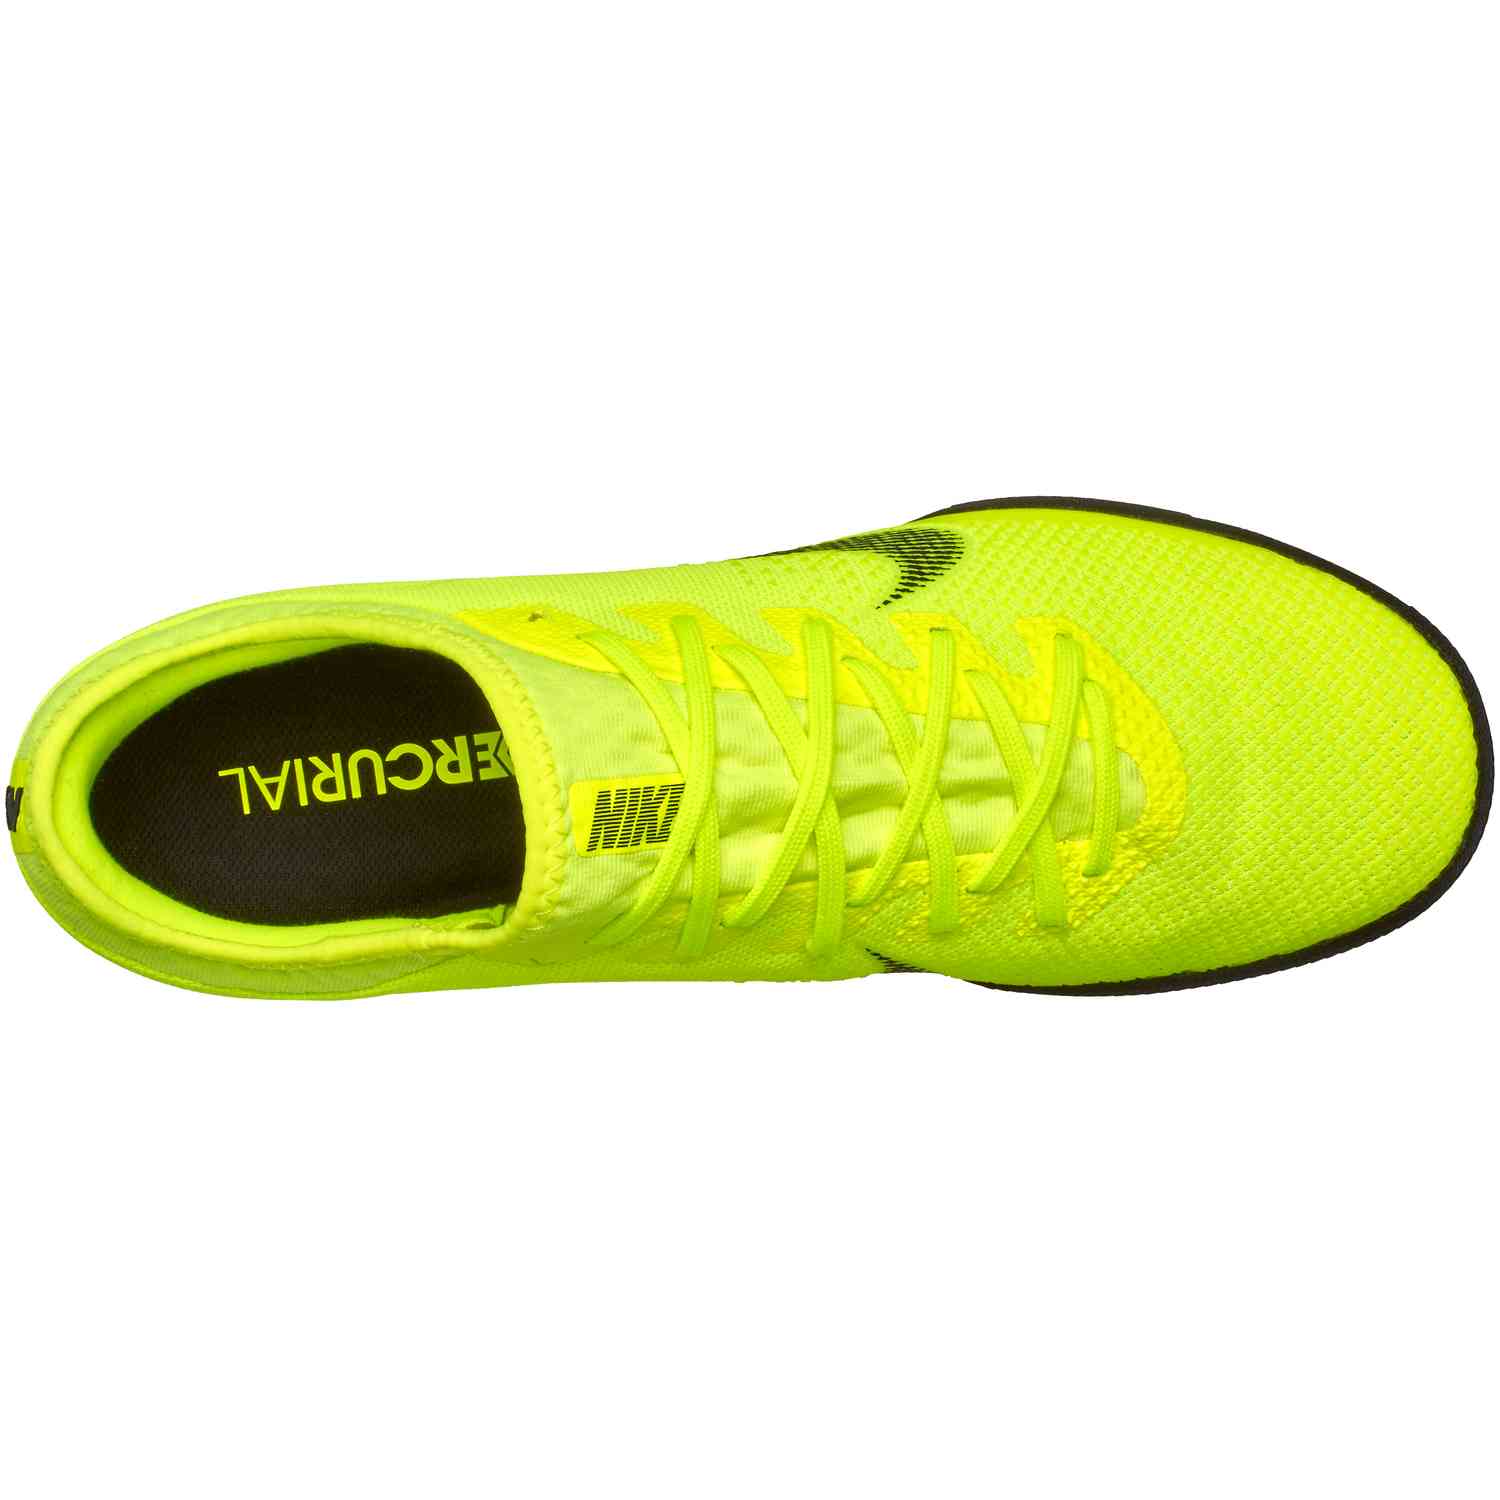 pelo Alrededor pecho Nike Mercurial VaporX 12 Pro TF - Volt/Black - Soccer Master